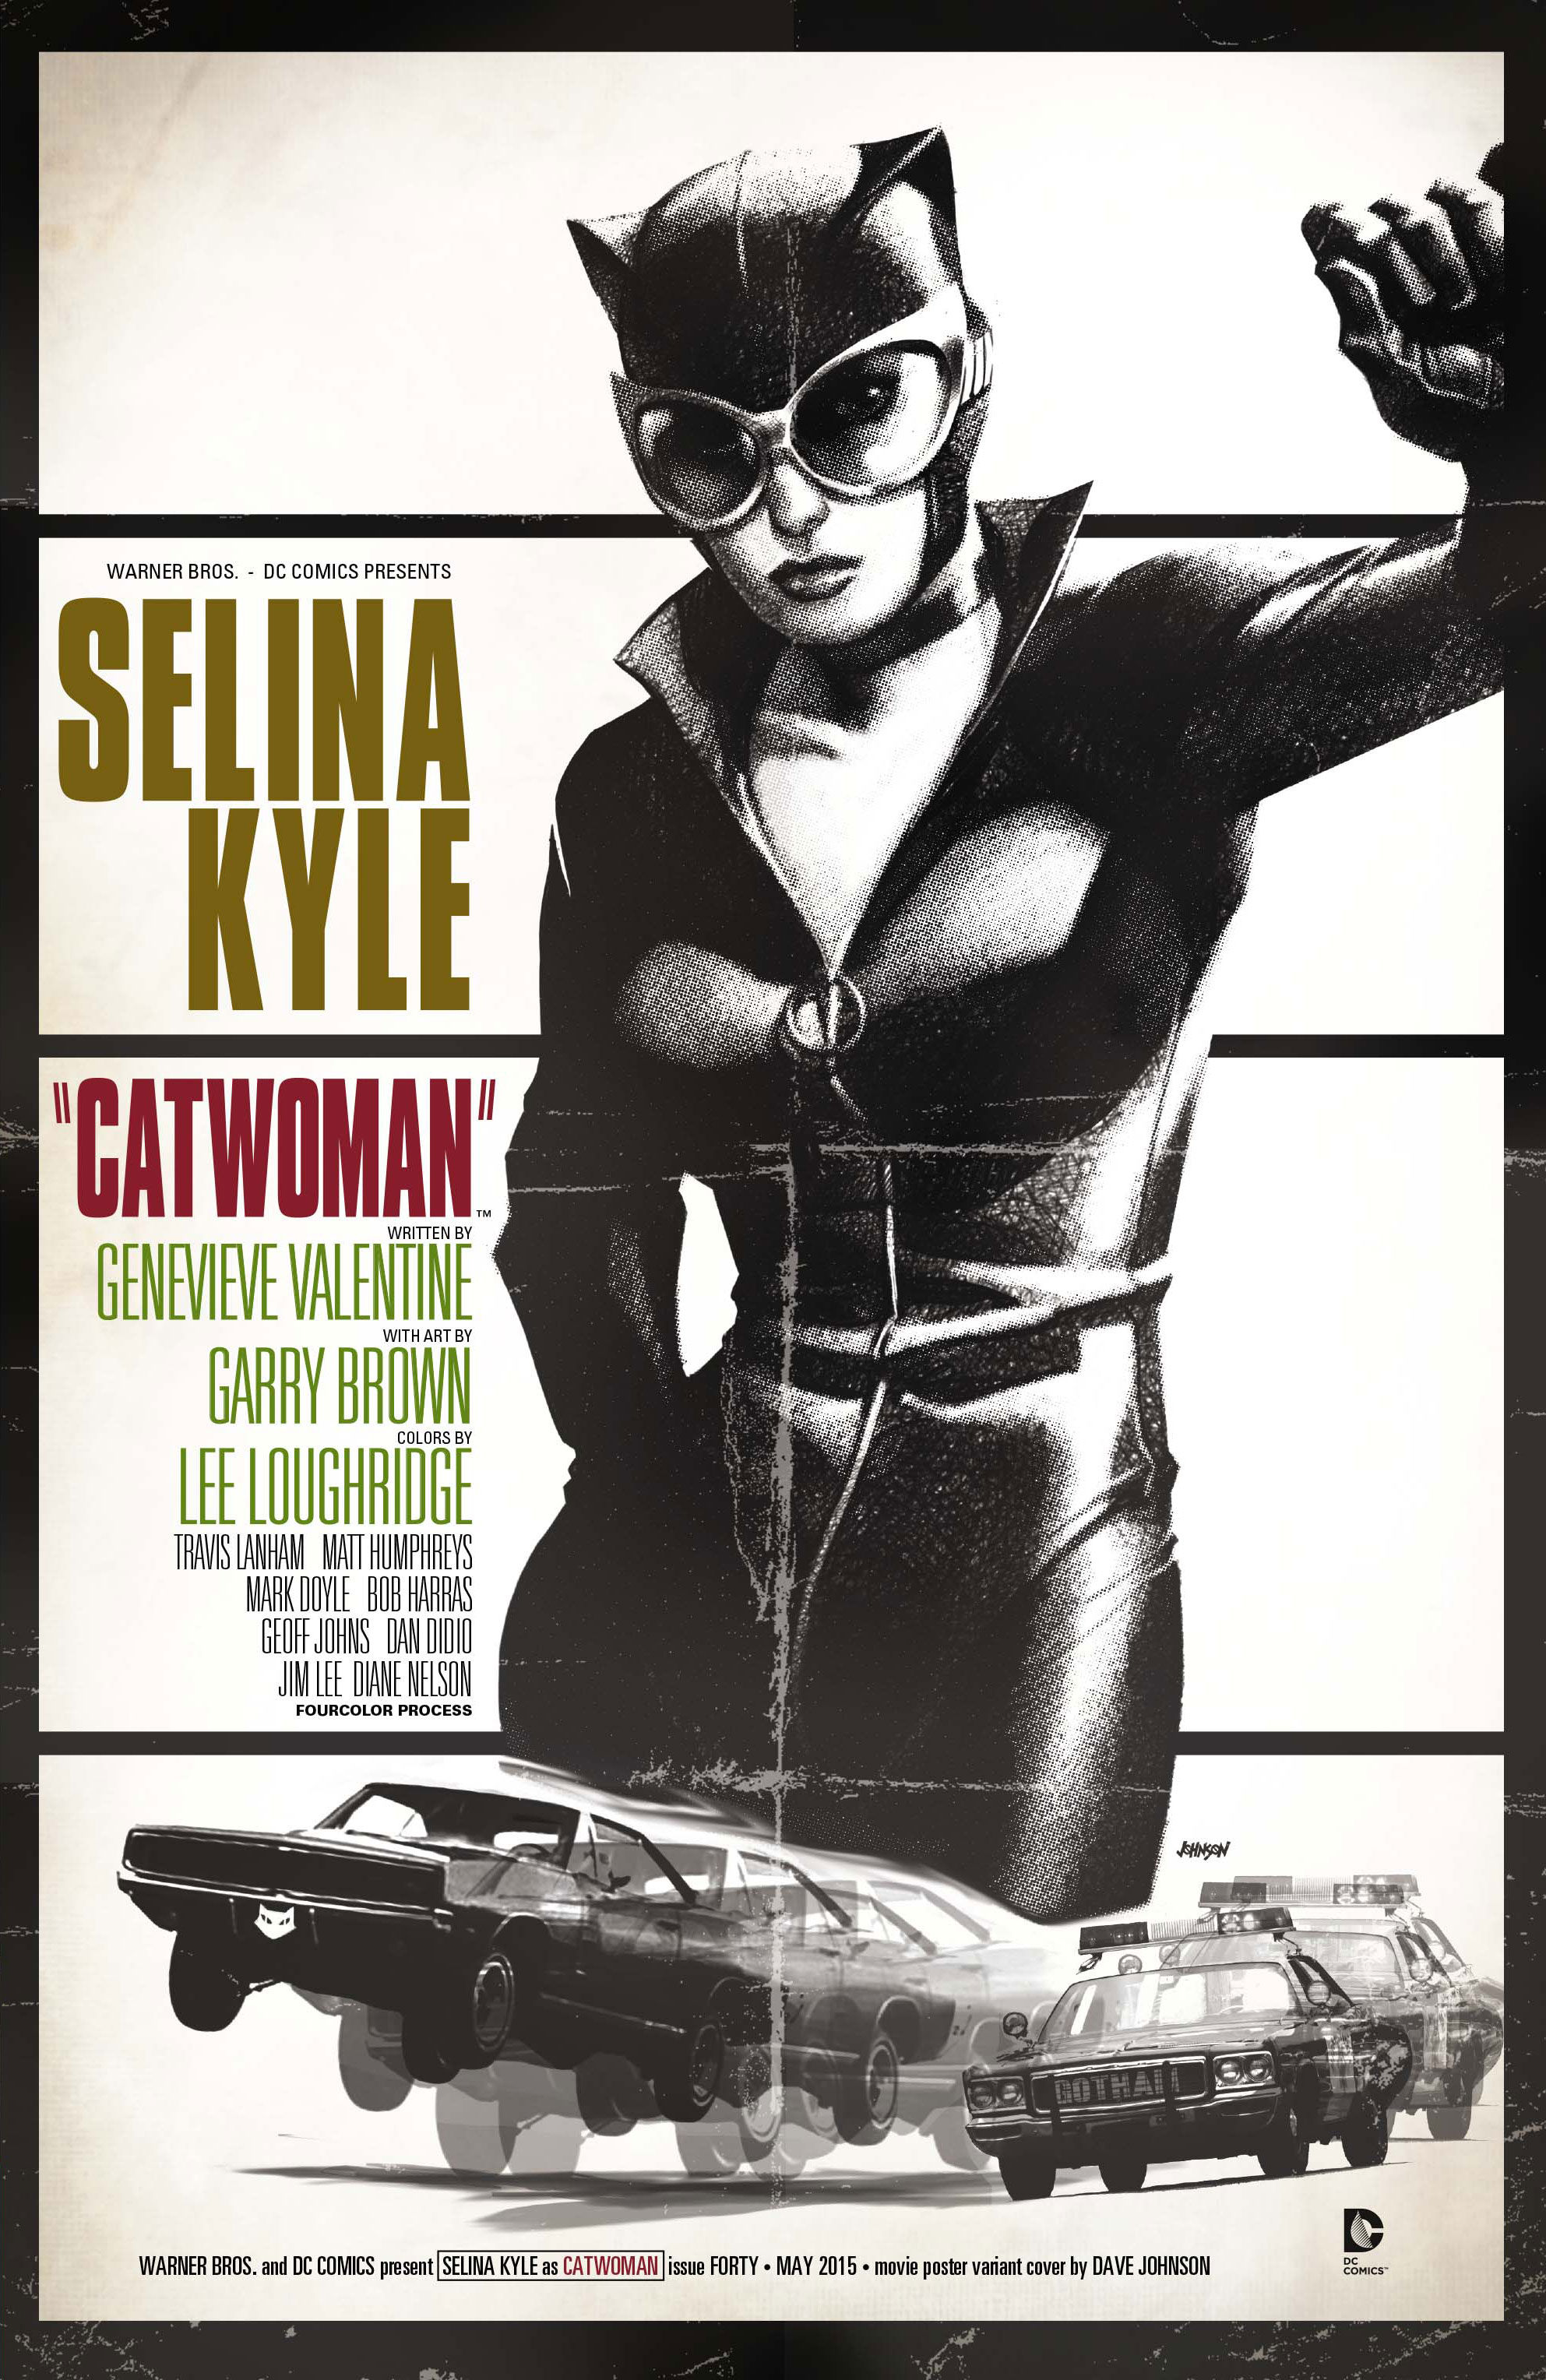 catwoman movie